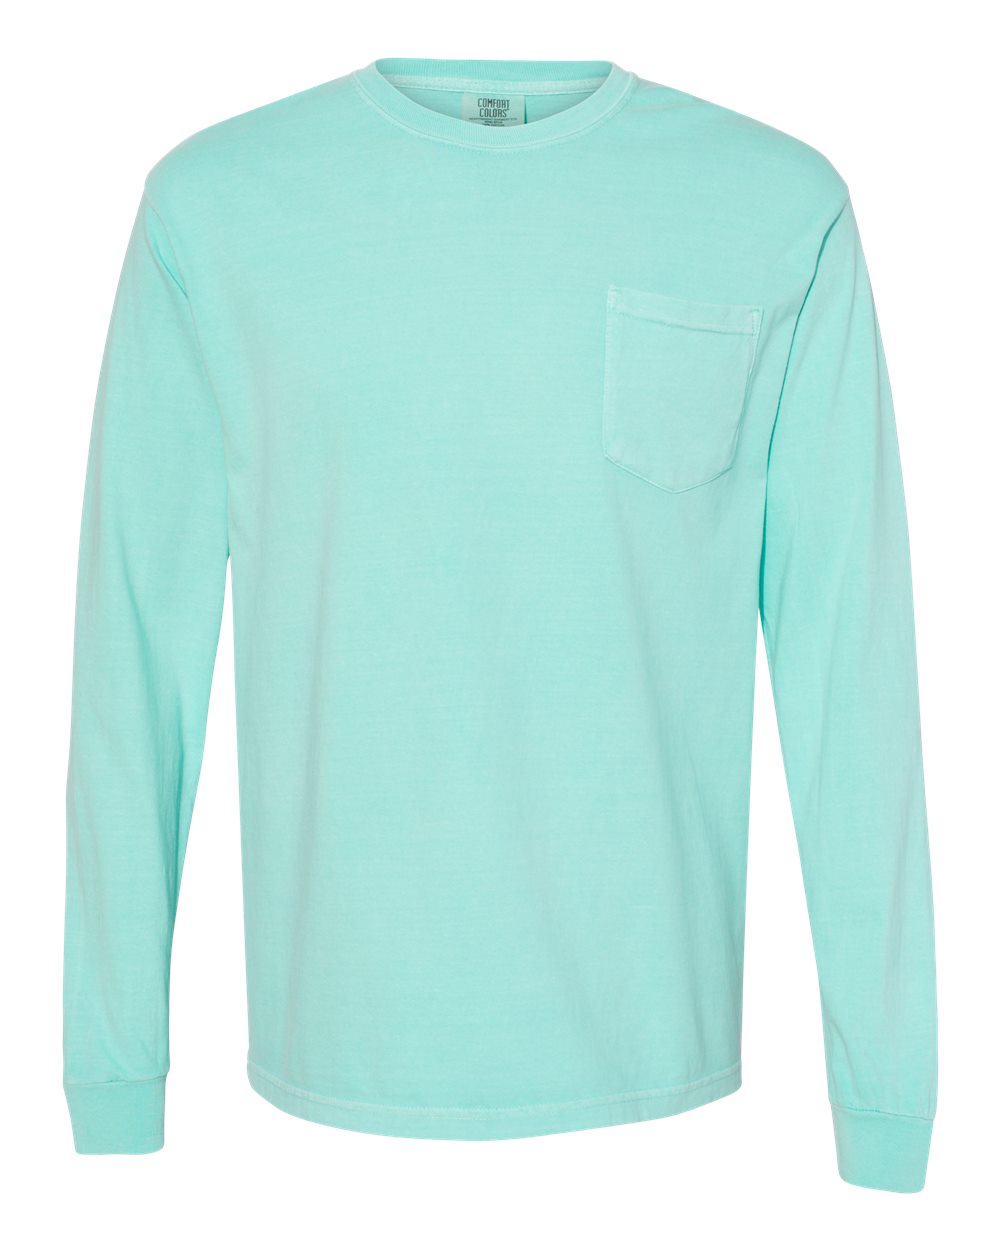 Monogrammed Comfort Colors Long Sleeve Pocket T-Shirt